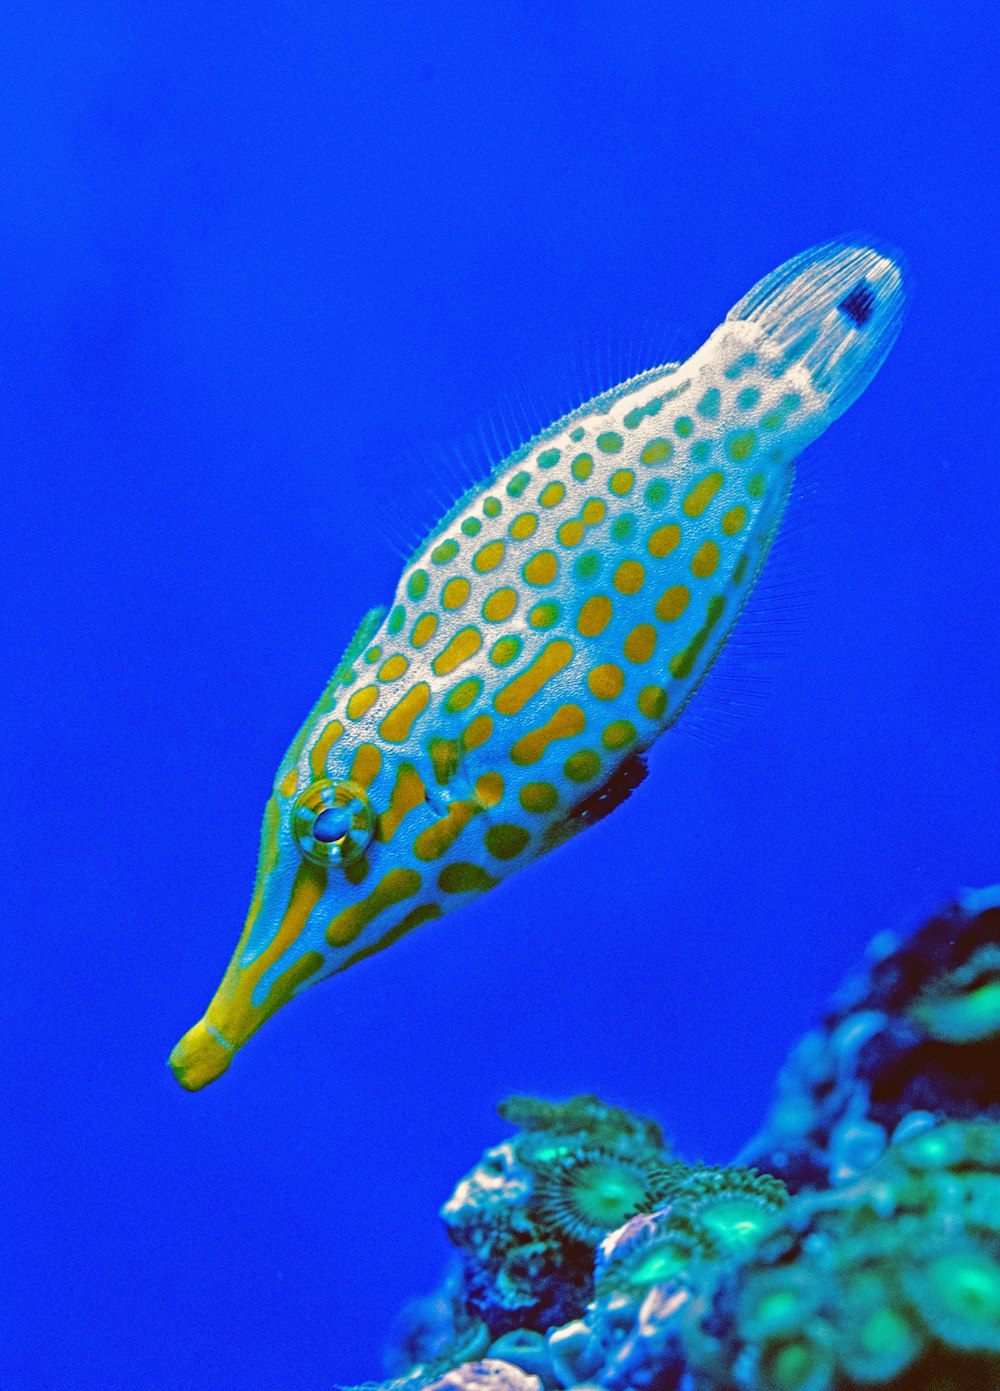 fotografia subacquea di pesci bianchi e gialli